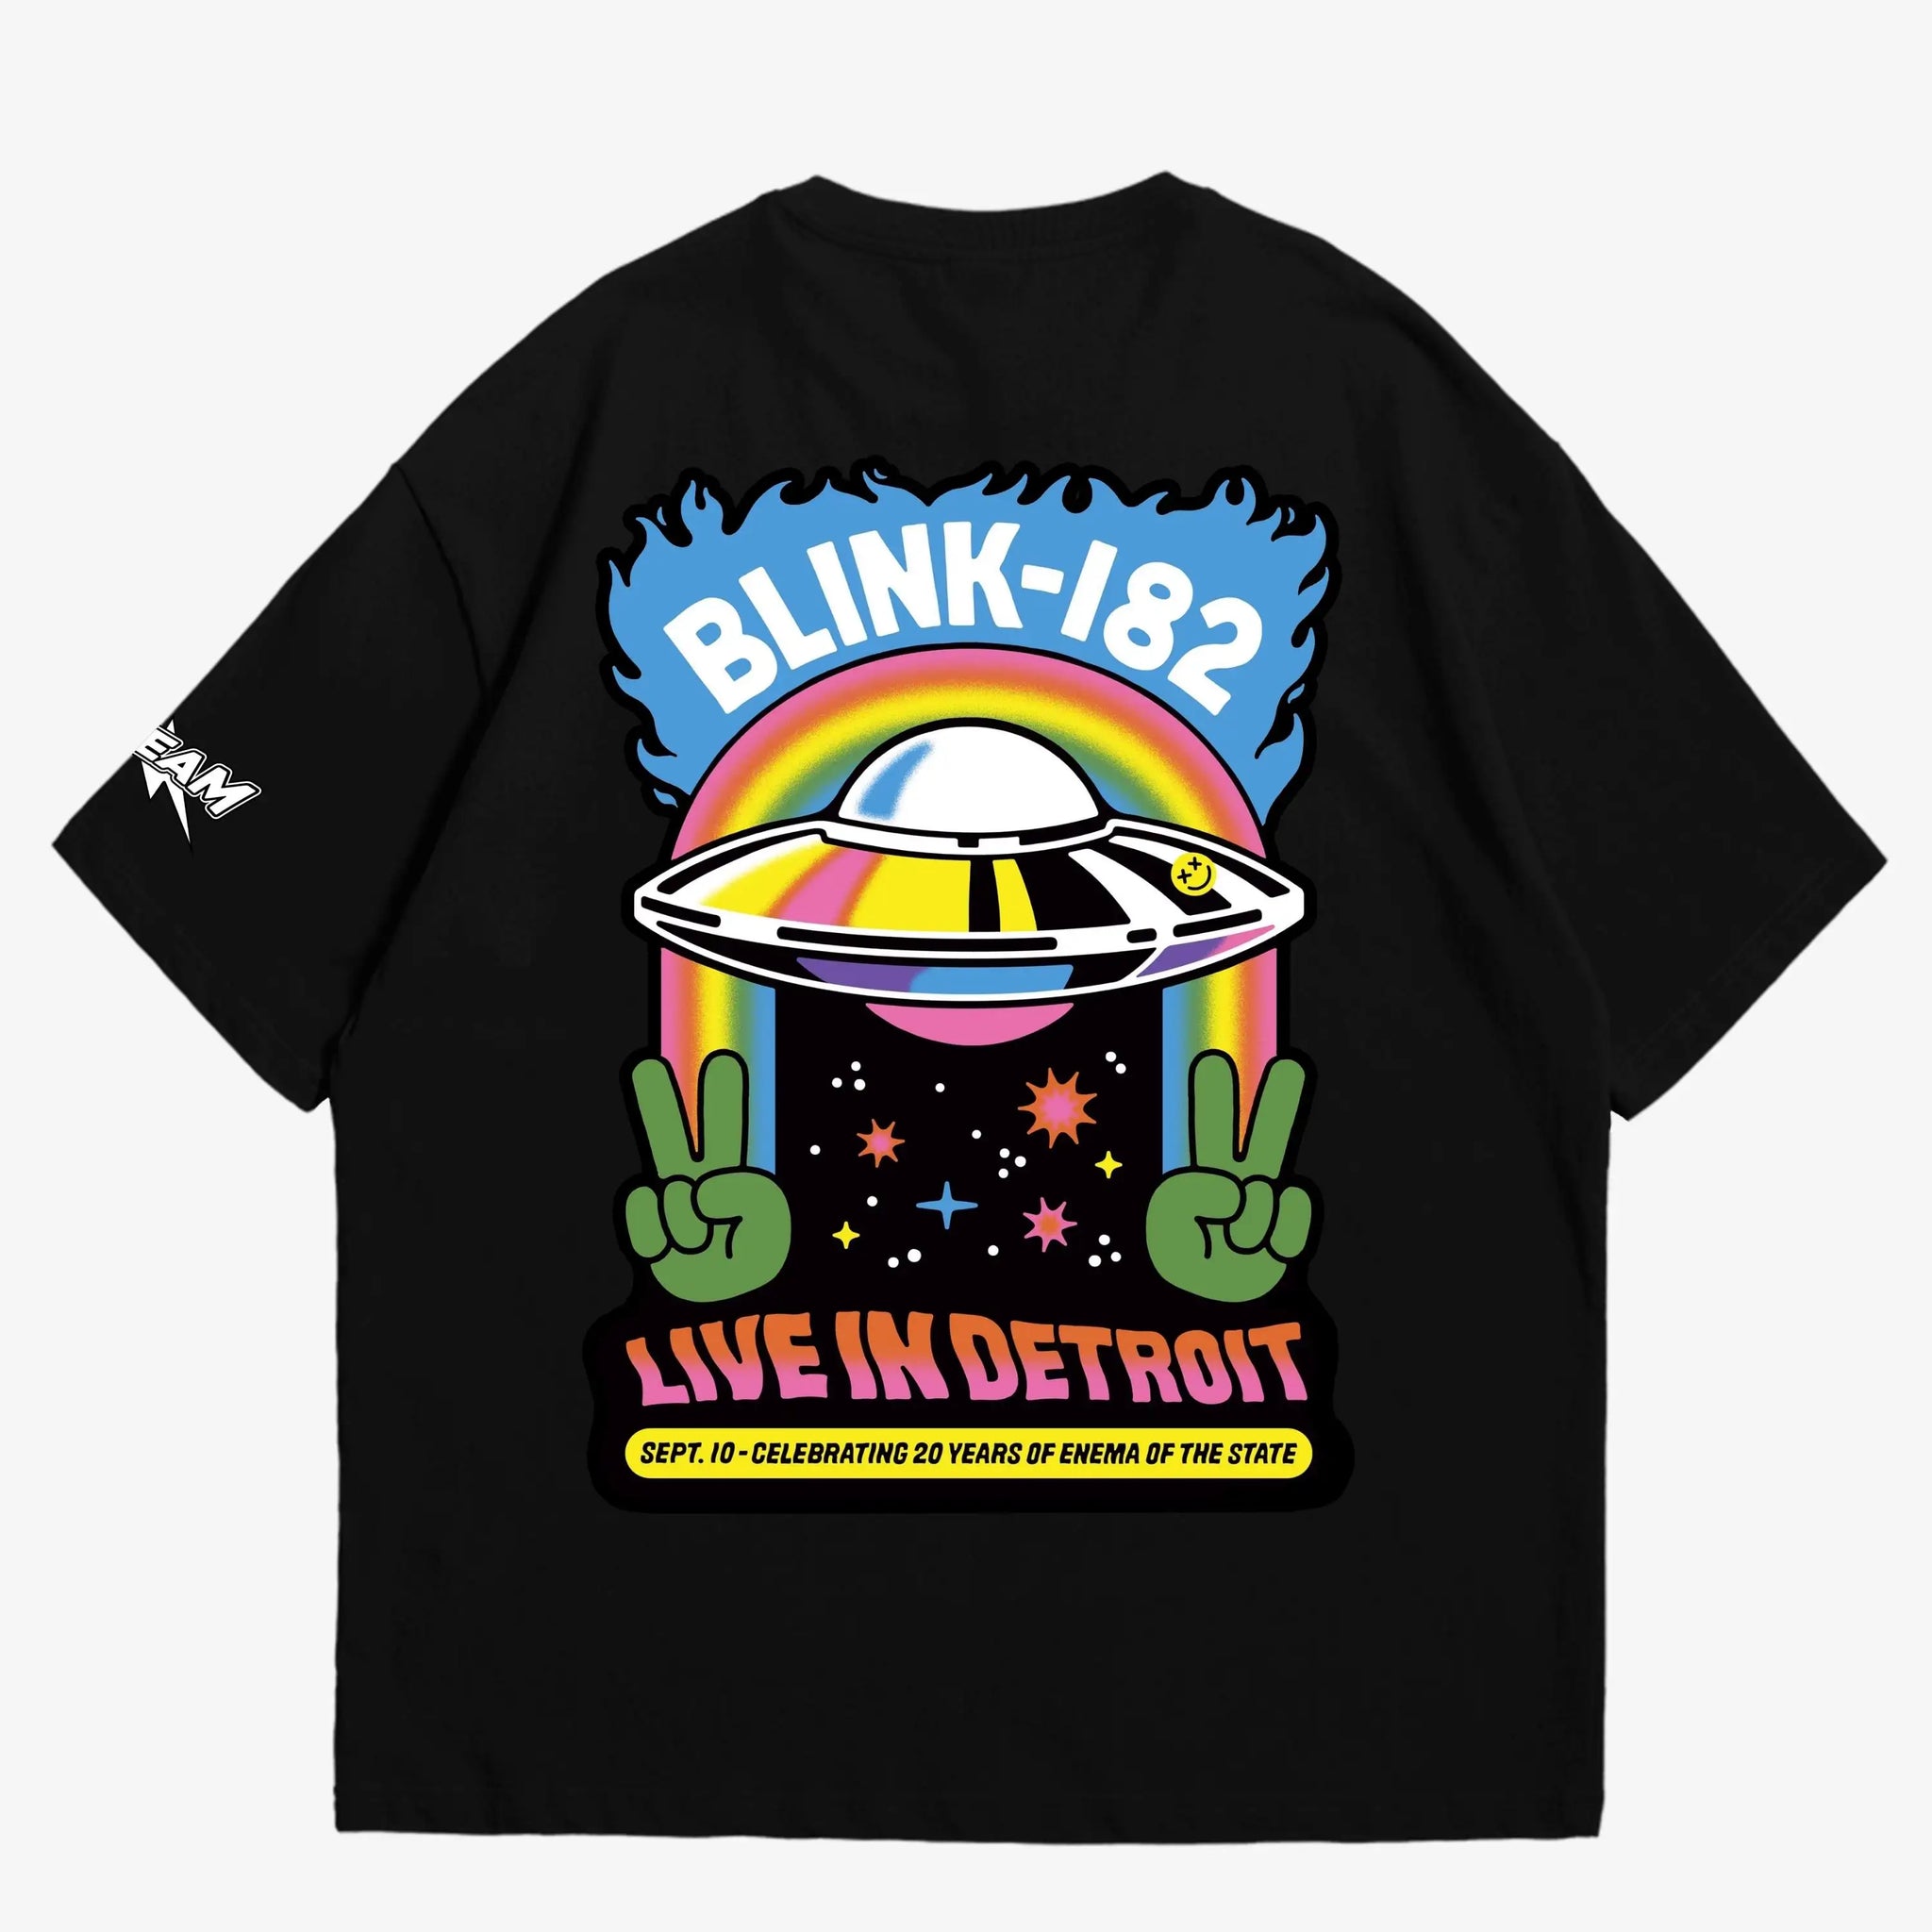 black oversized t-shirt, blink 182 rock band graphic y2k print, skream streetwear t-shirt